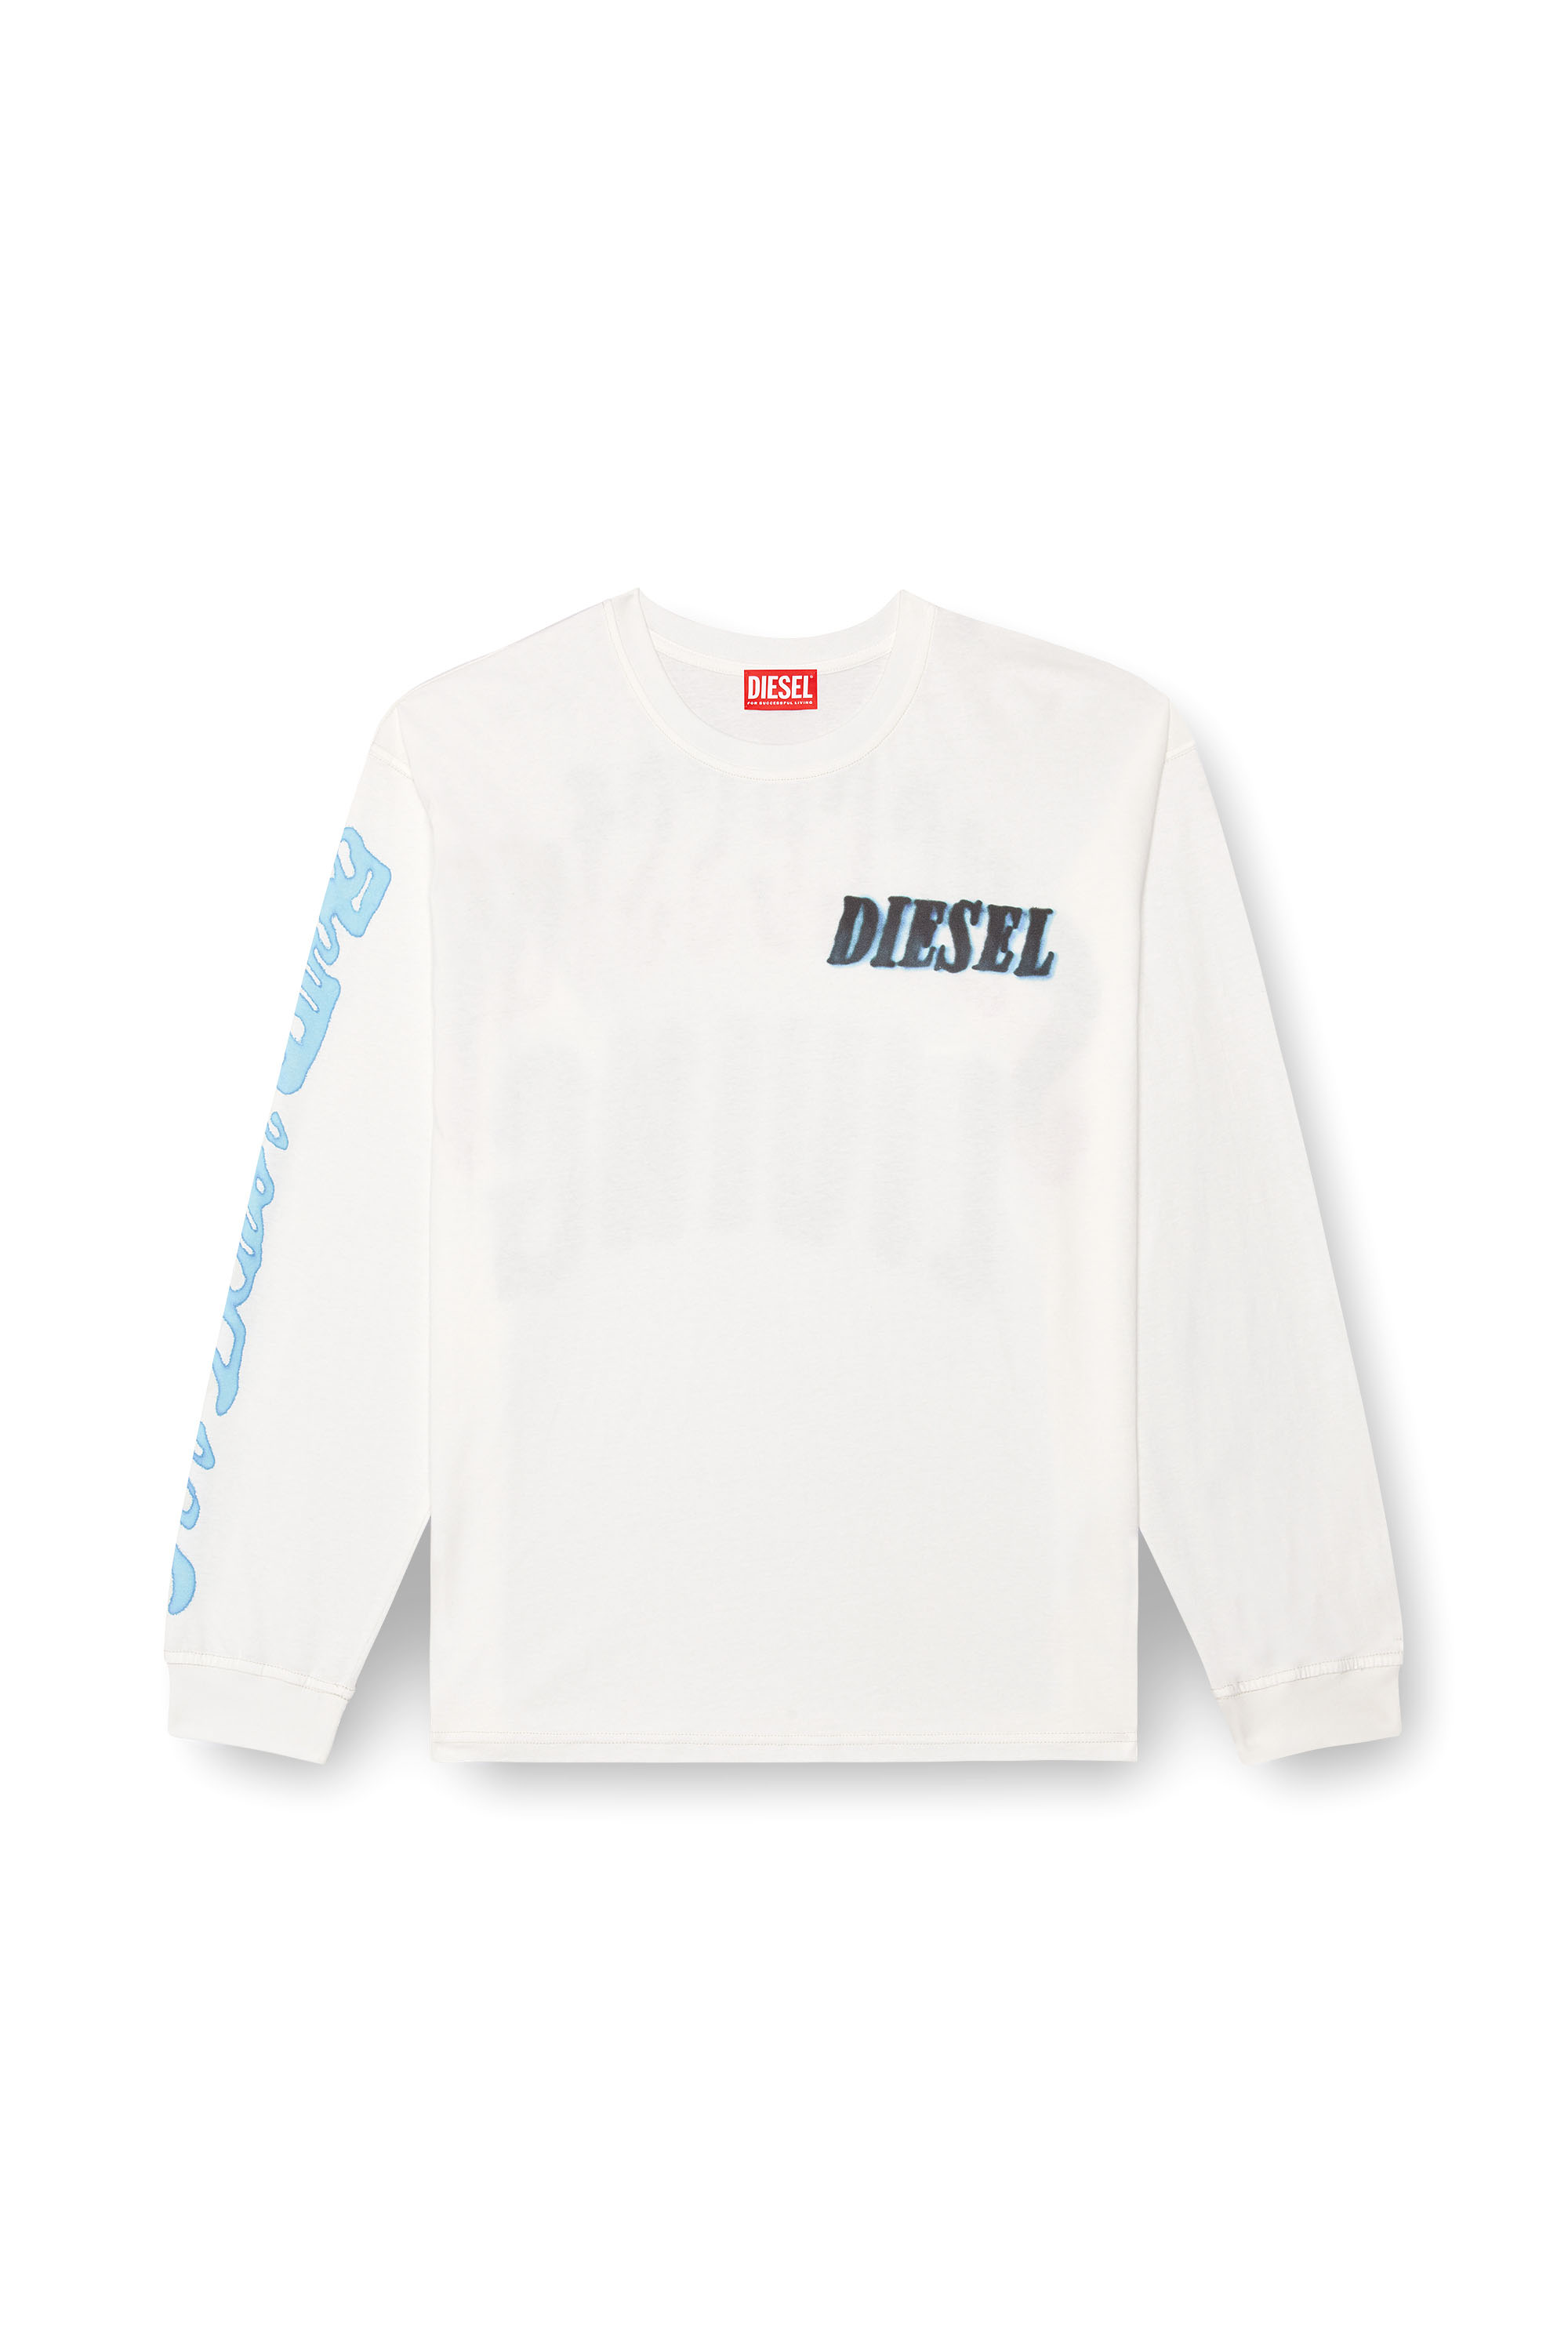 Diesel - T-BOXT-LS-Q15, Uomo T-shirt a maniche lunghe con stampe logo in Bianco - Image 3